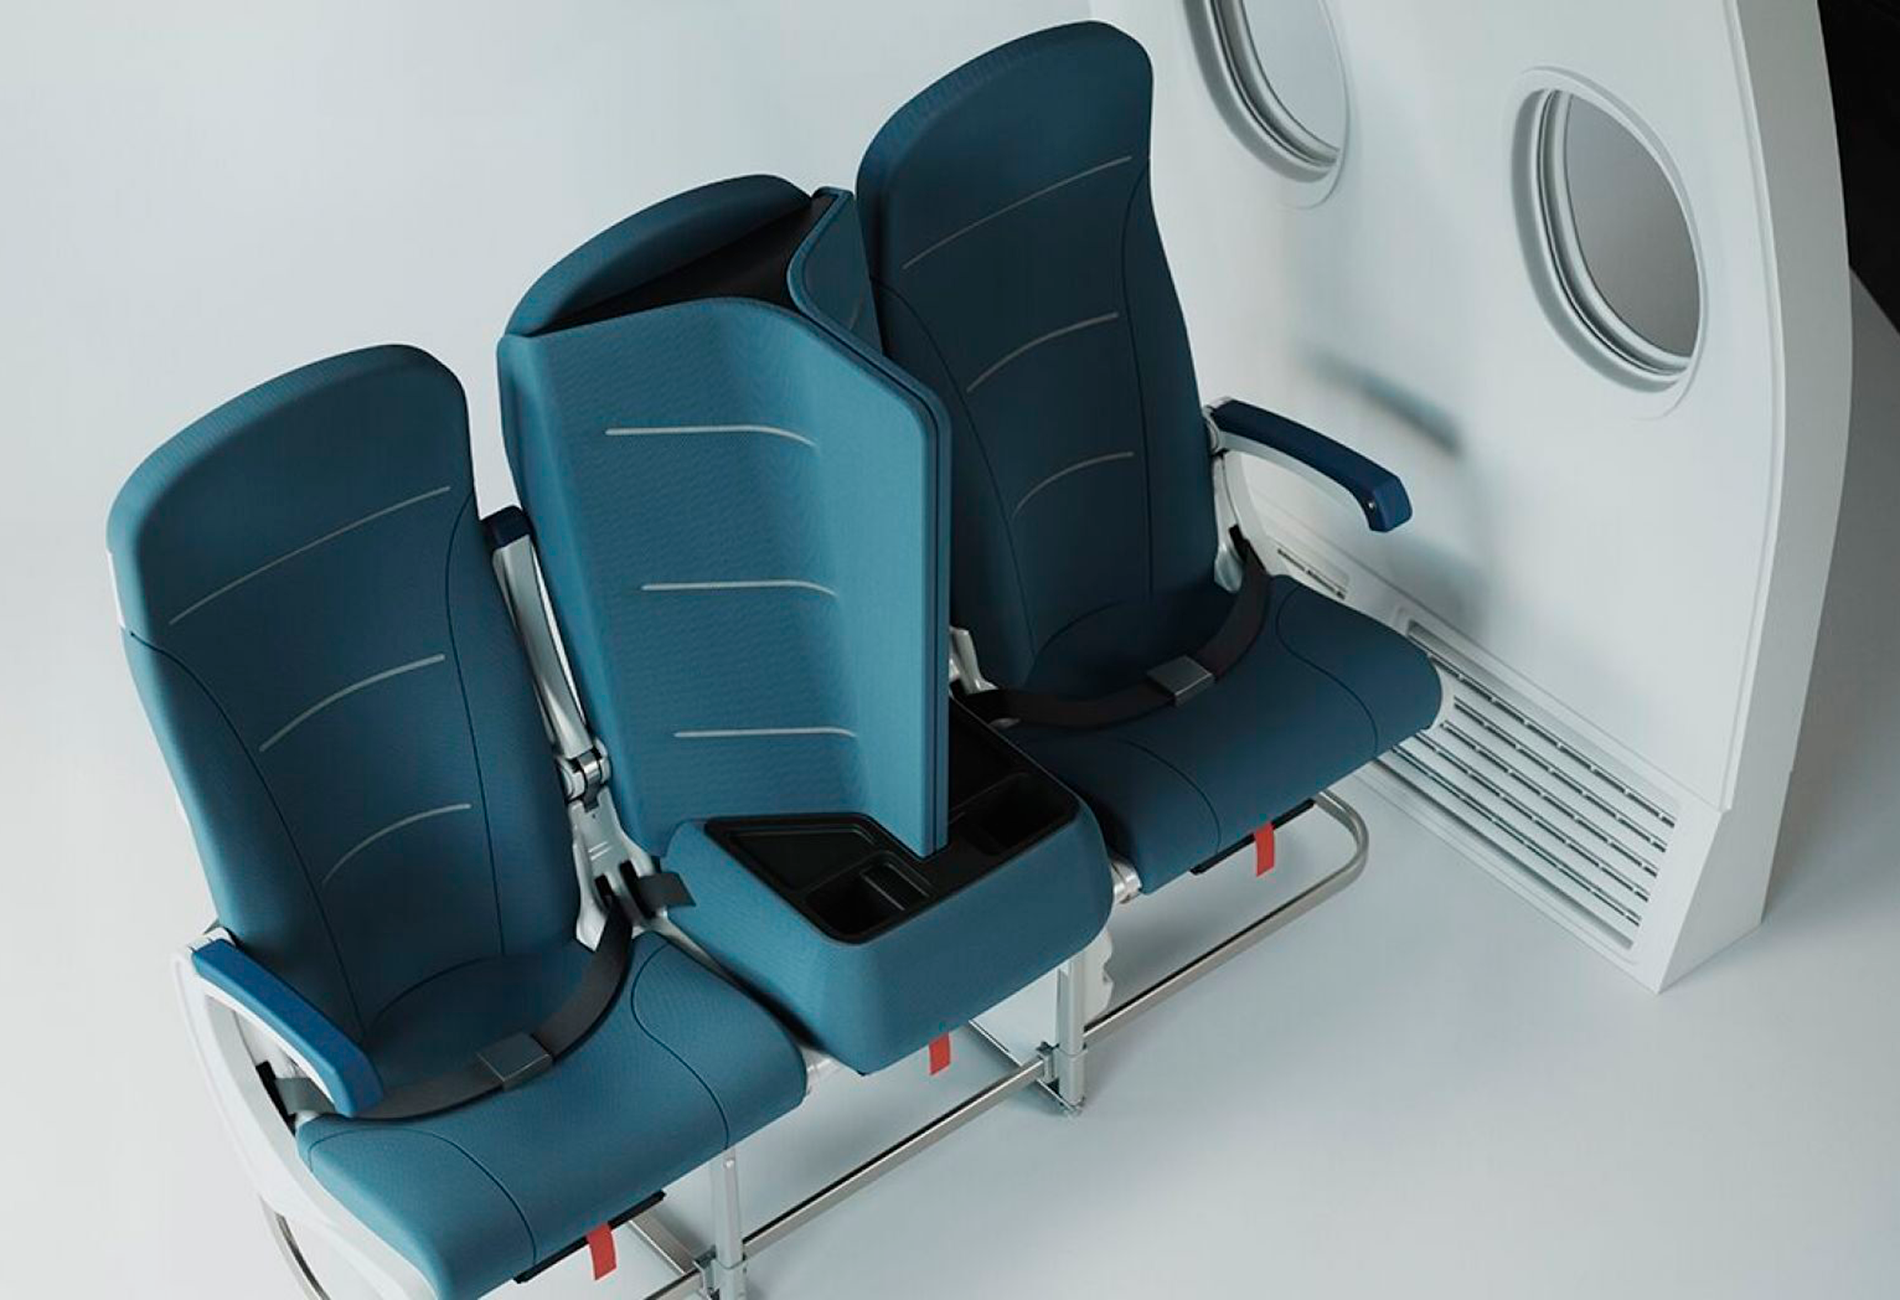 широкие кресла в самолете